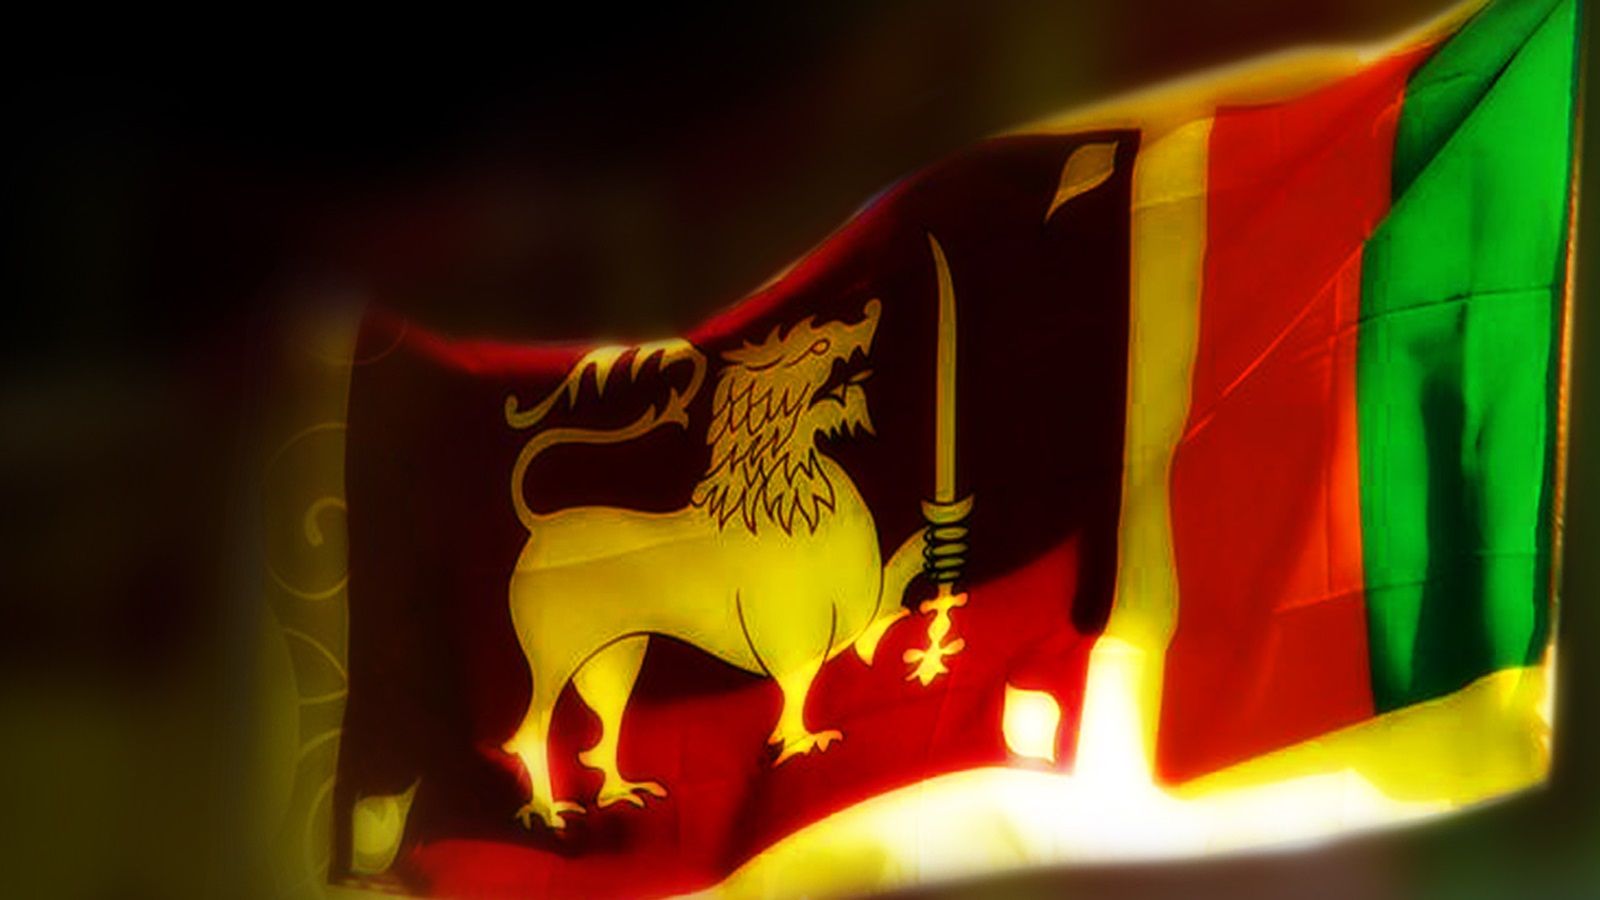 Sri Lanka Flag Wallpapers